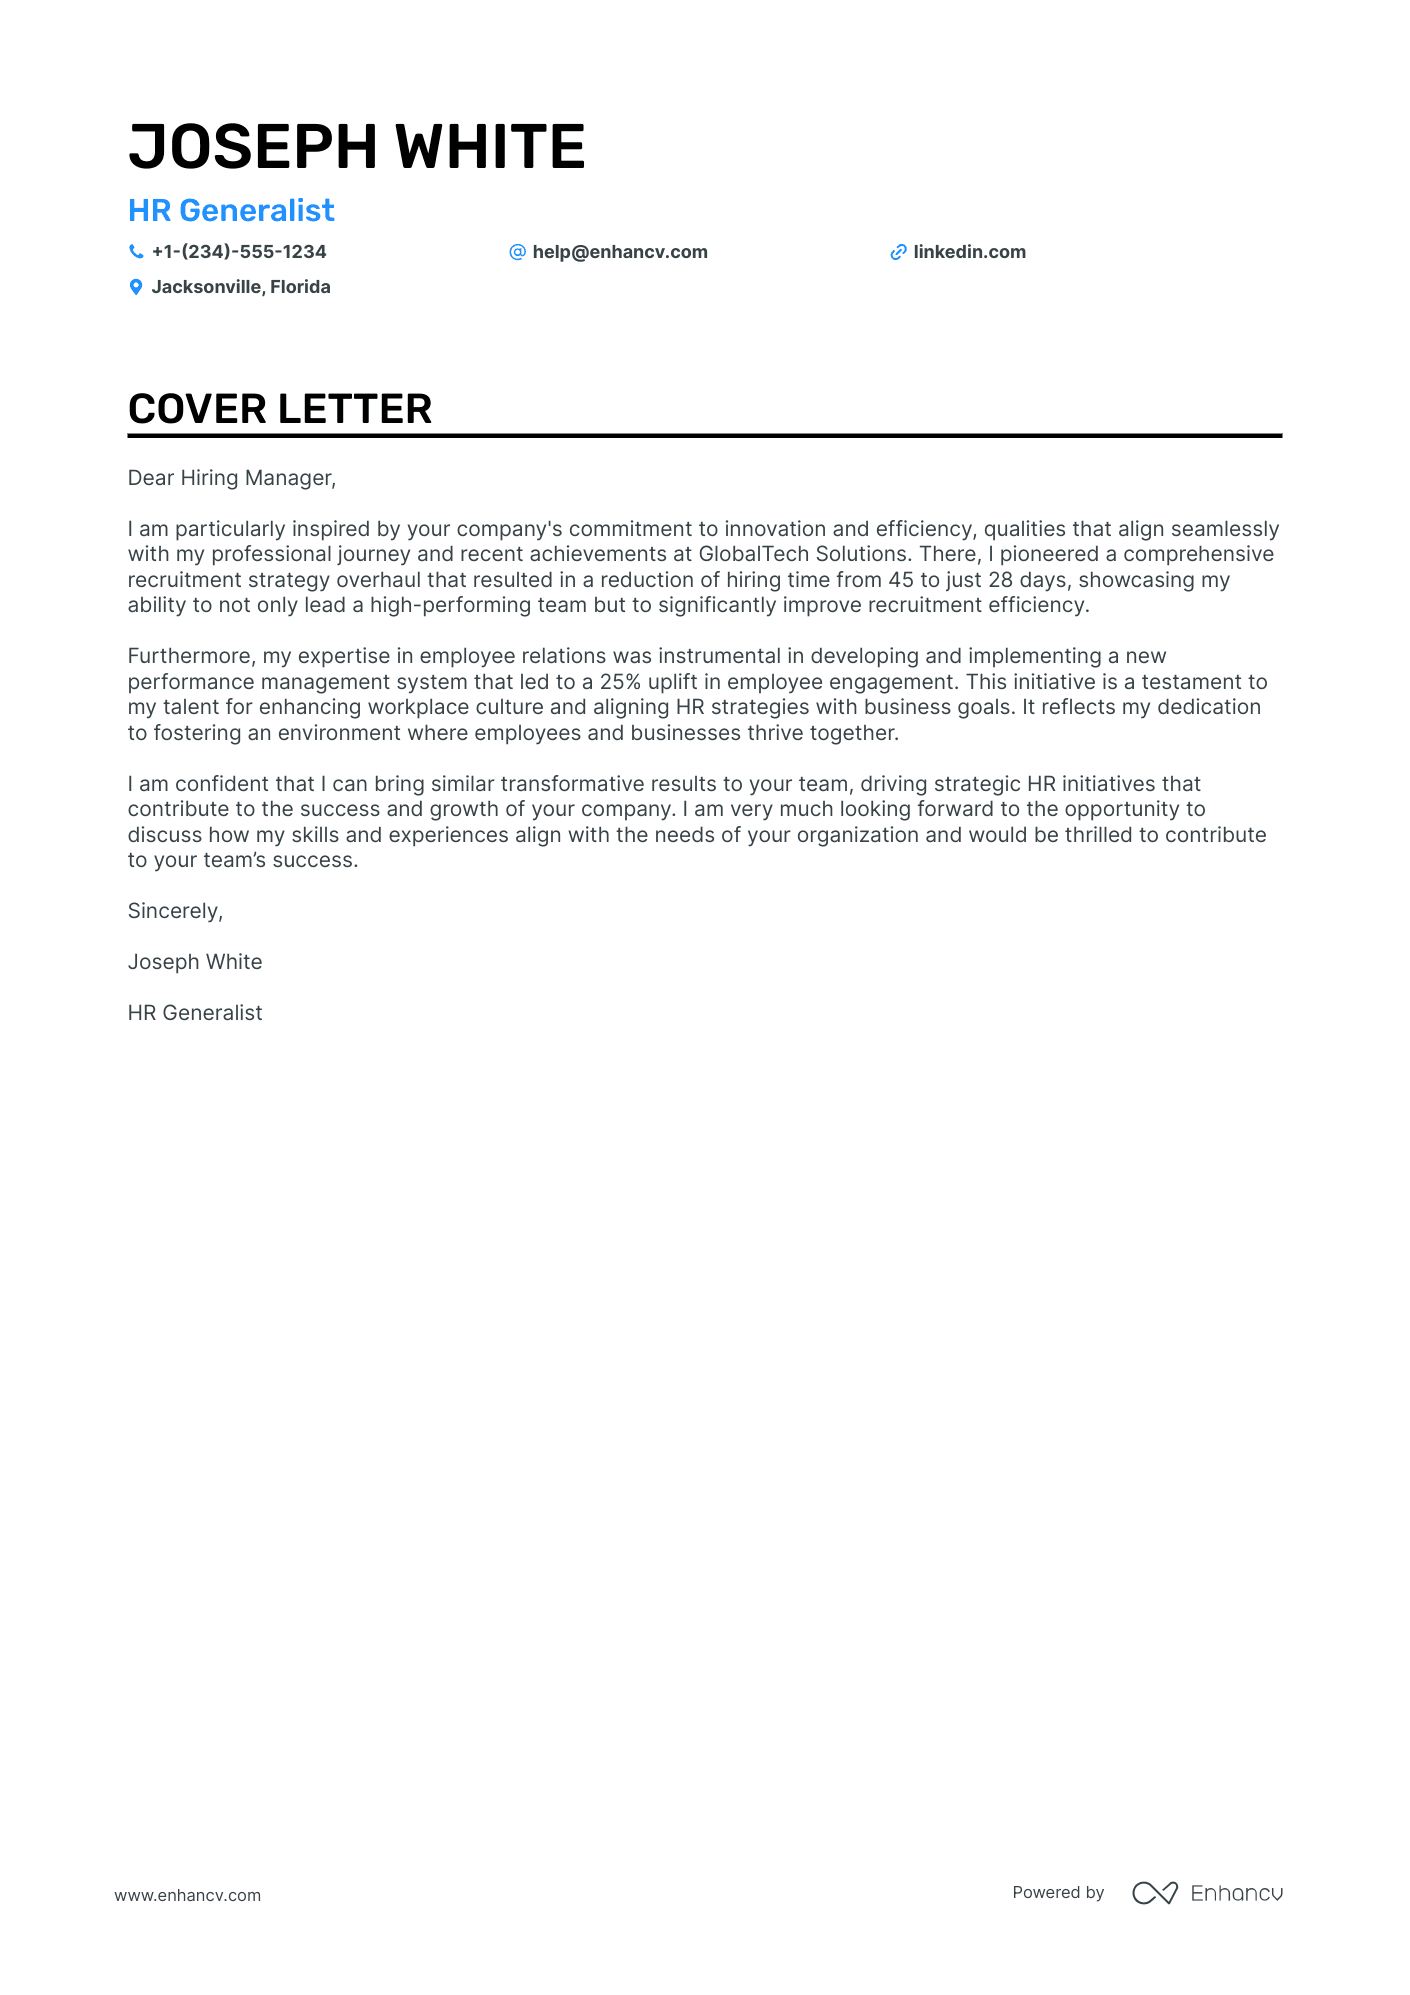 HR Generalist cover letter